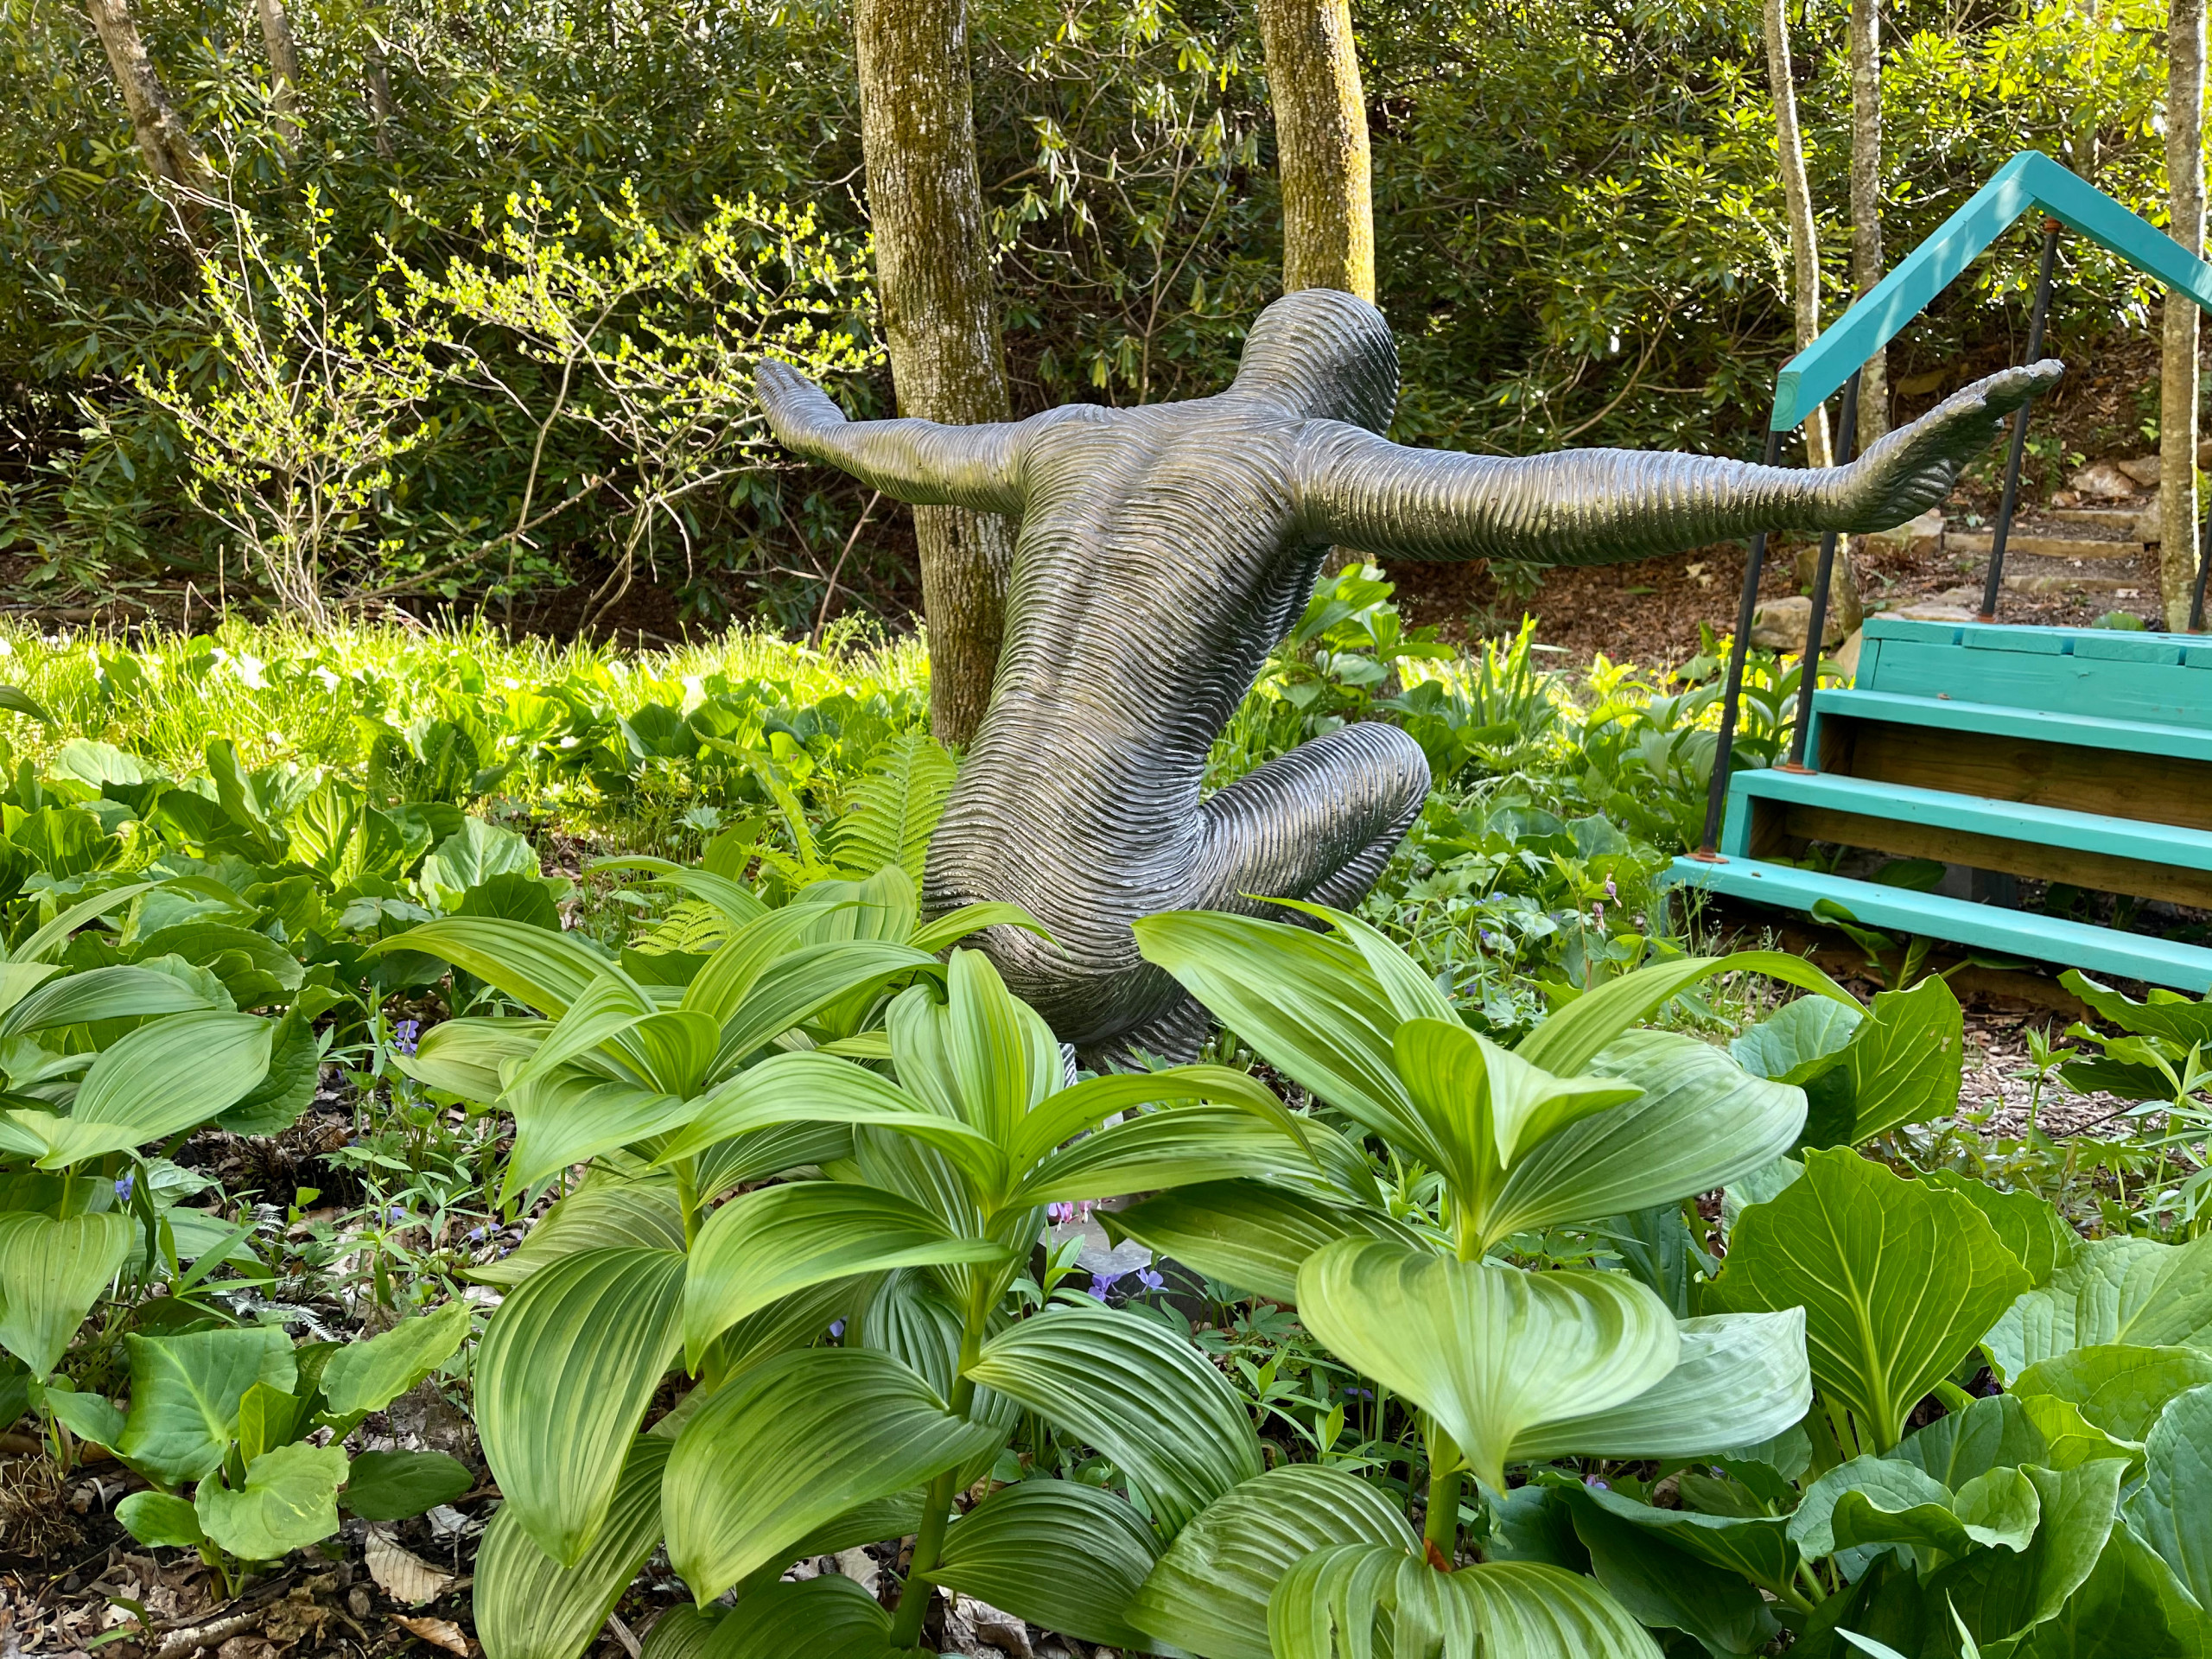 Metal sculpture greets garden visitors